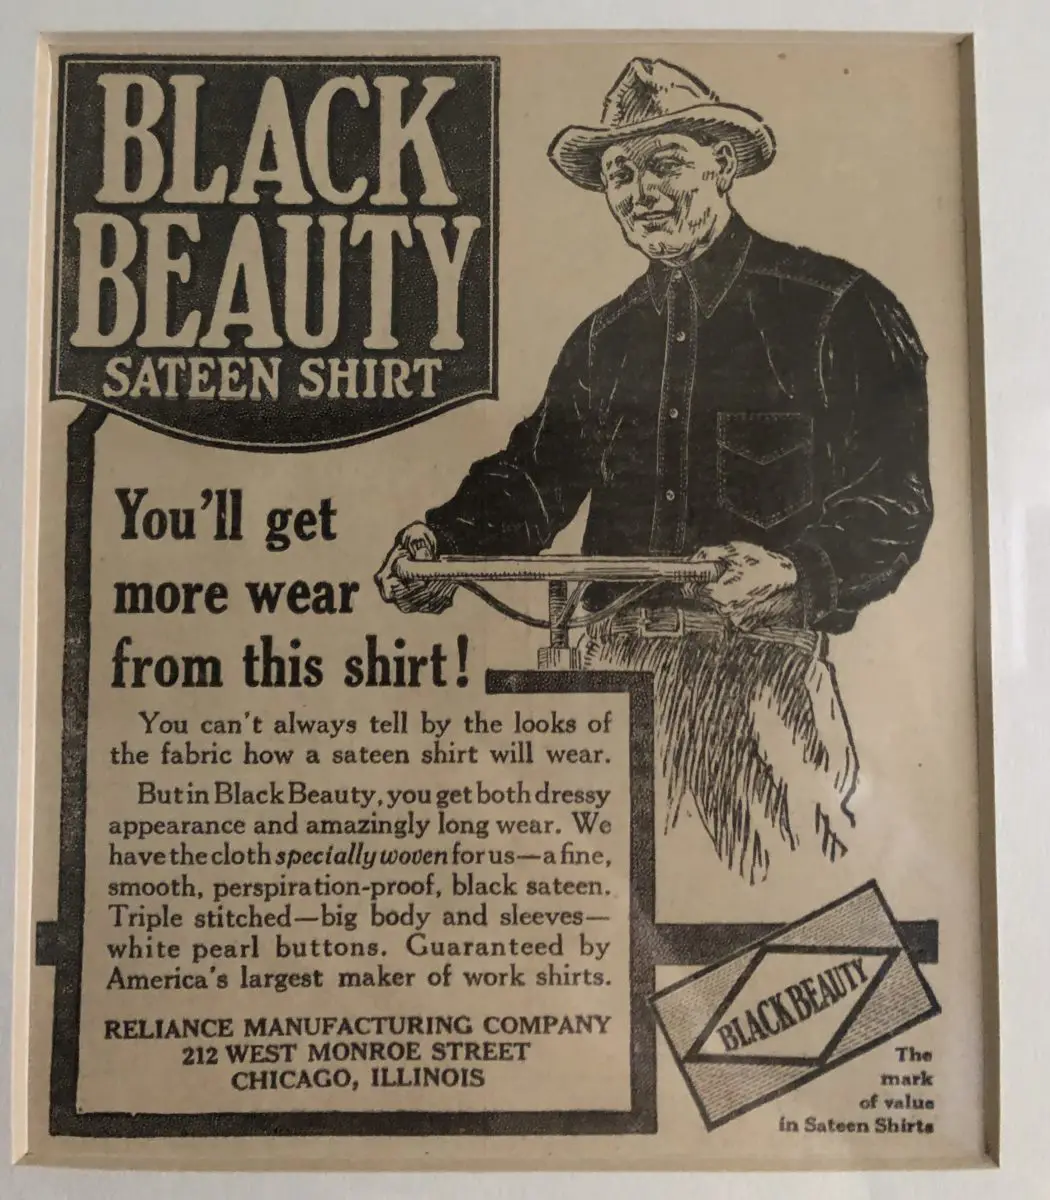 The Black Beauty sateen shirt